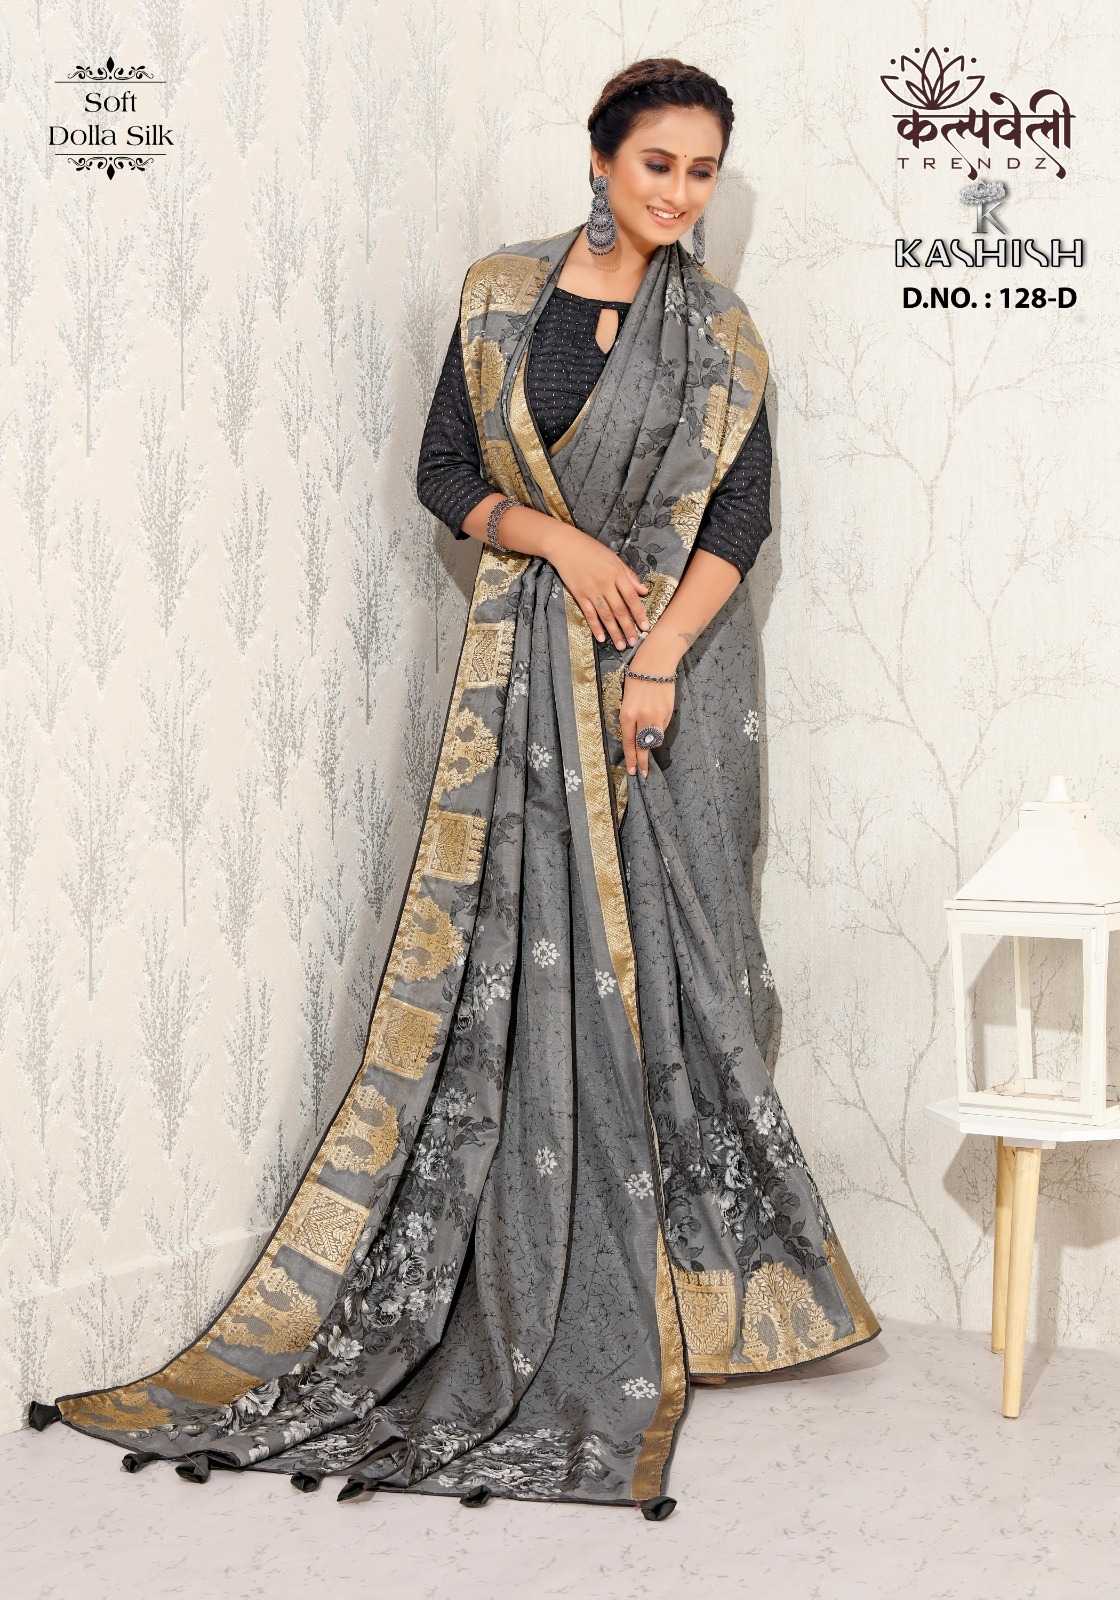 kalpavelly trendz kashish 128 latest dola silk saree collection